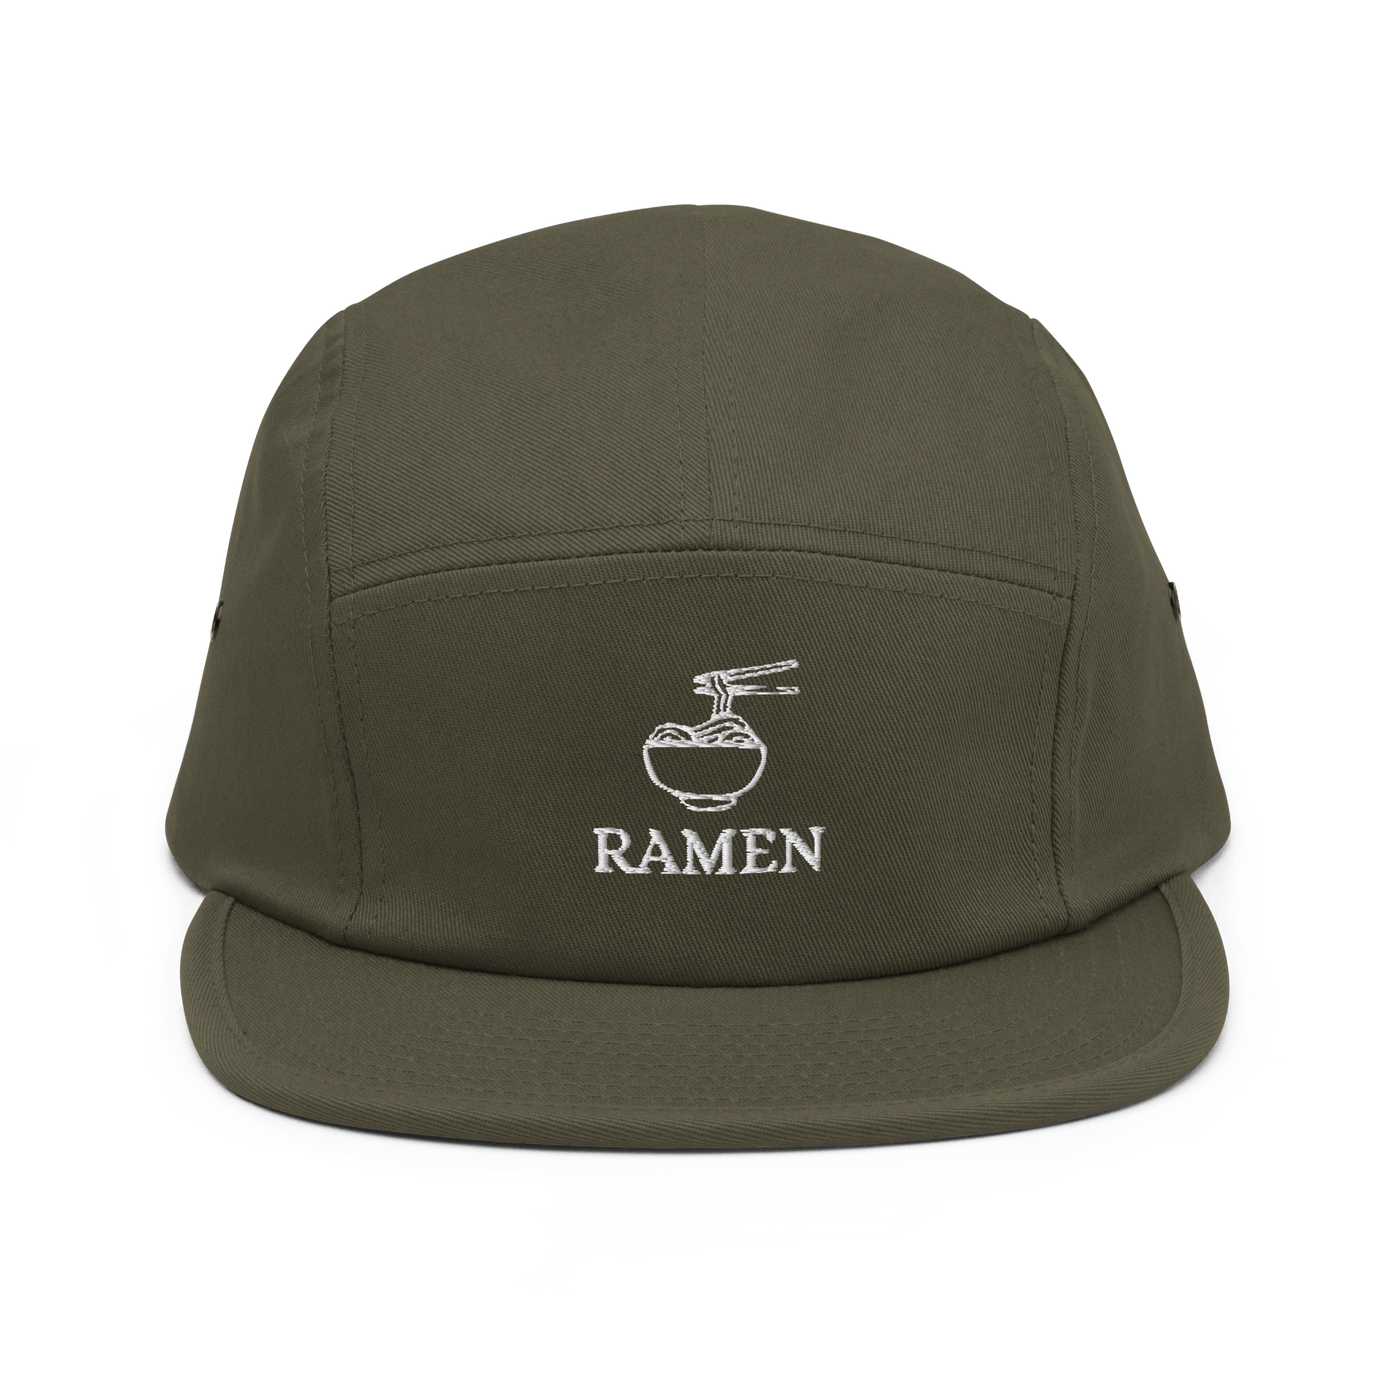 Ramen Five Panel Cap - Olive - - Just Another Cap Store